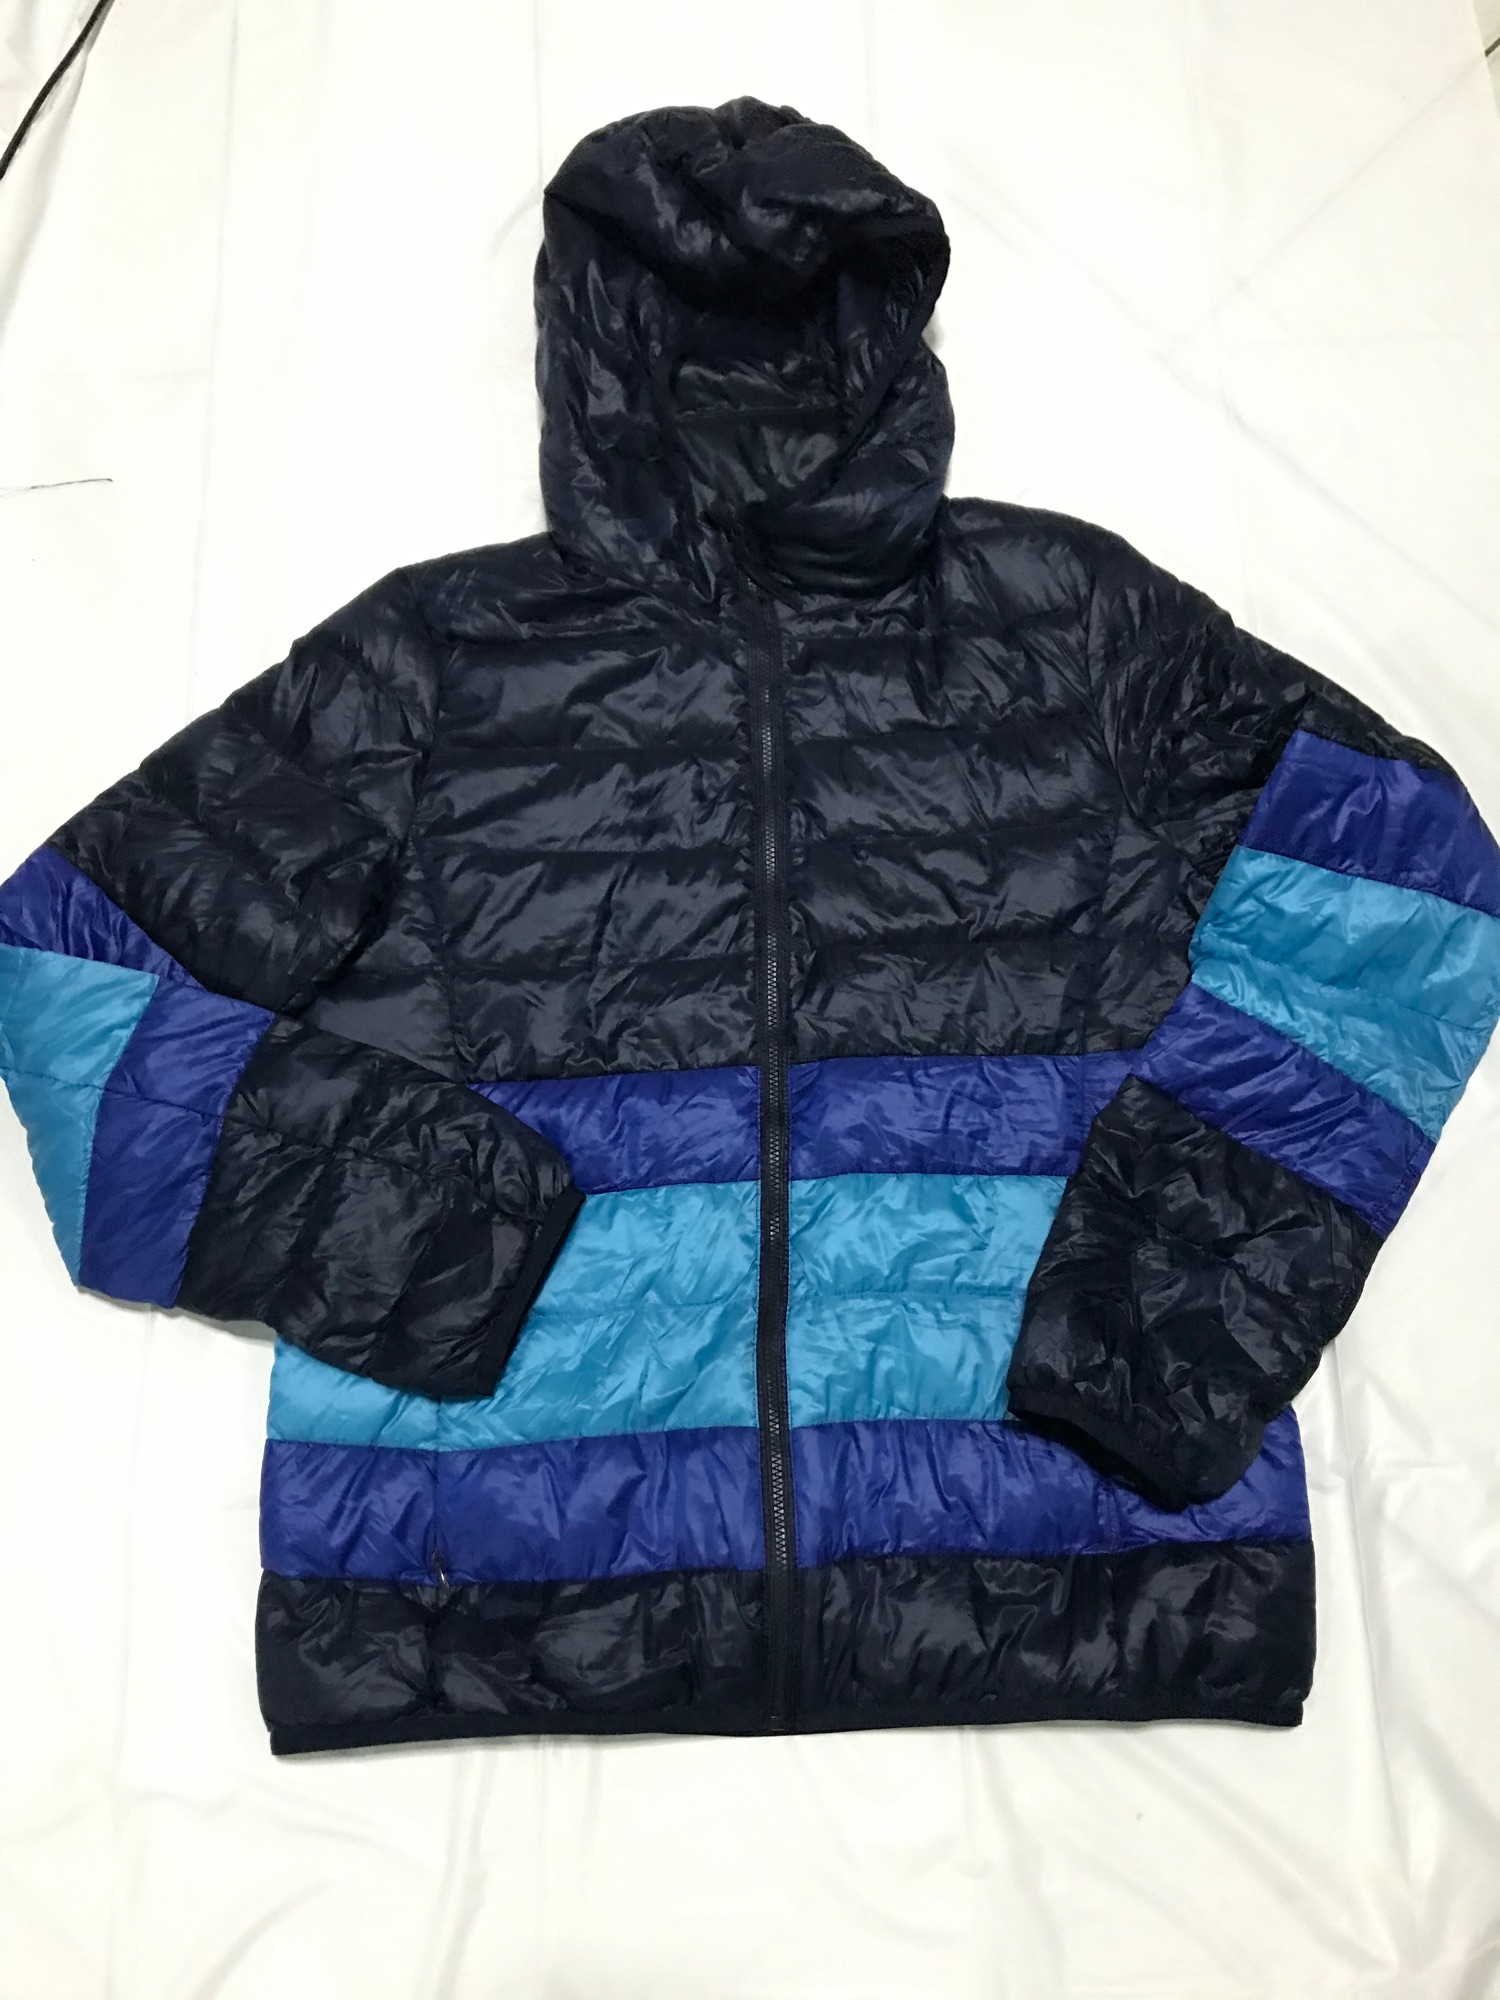 Uniqlo winter jacket | Lazada PH